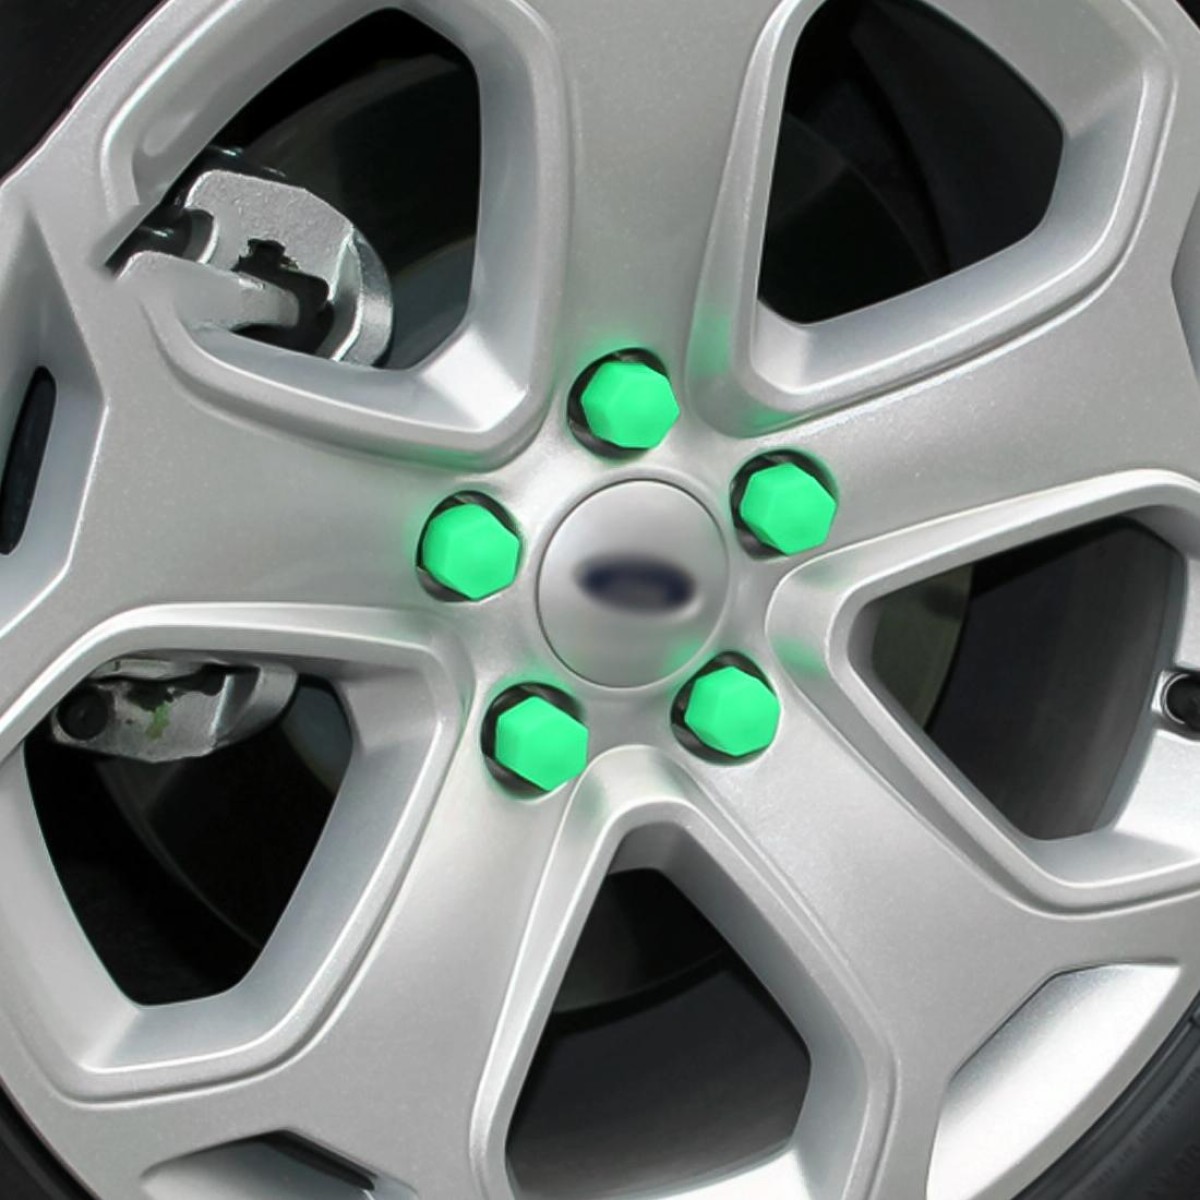 20 PCS Silicone Luminous Car Hubcap(Green)